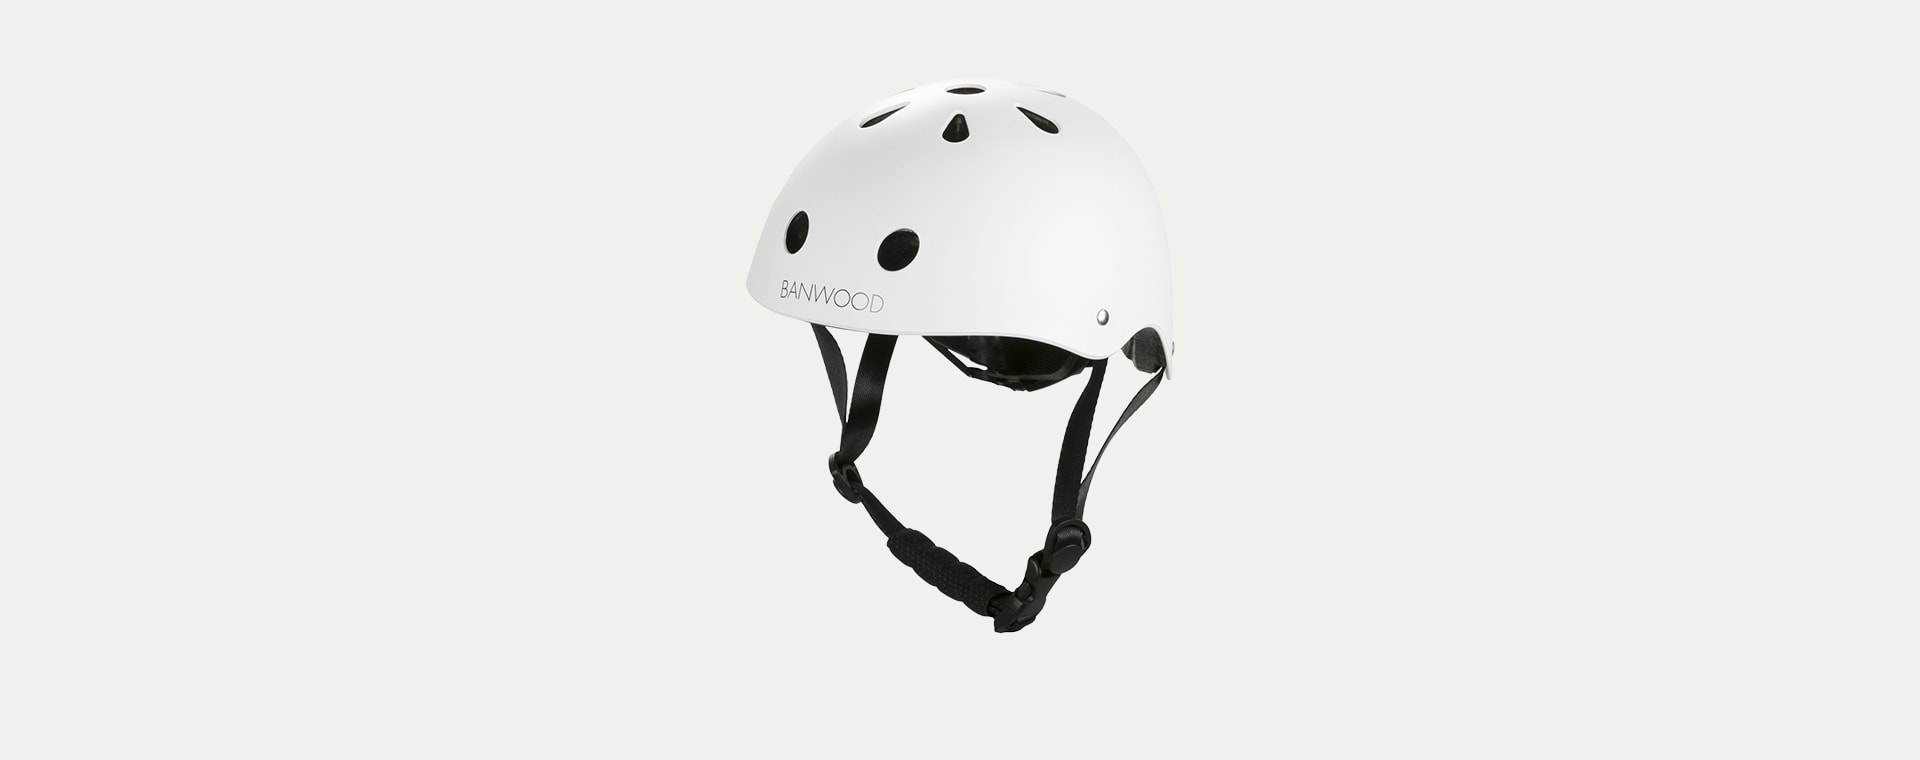 Buy the Banwood Classic Kids Bike Helmet at KIDLY UK